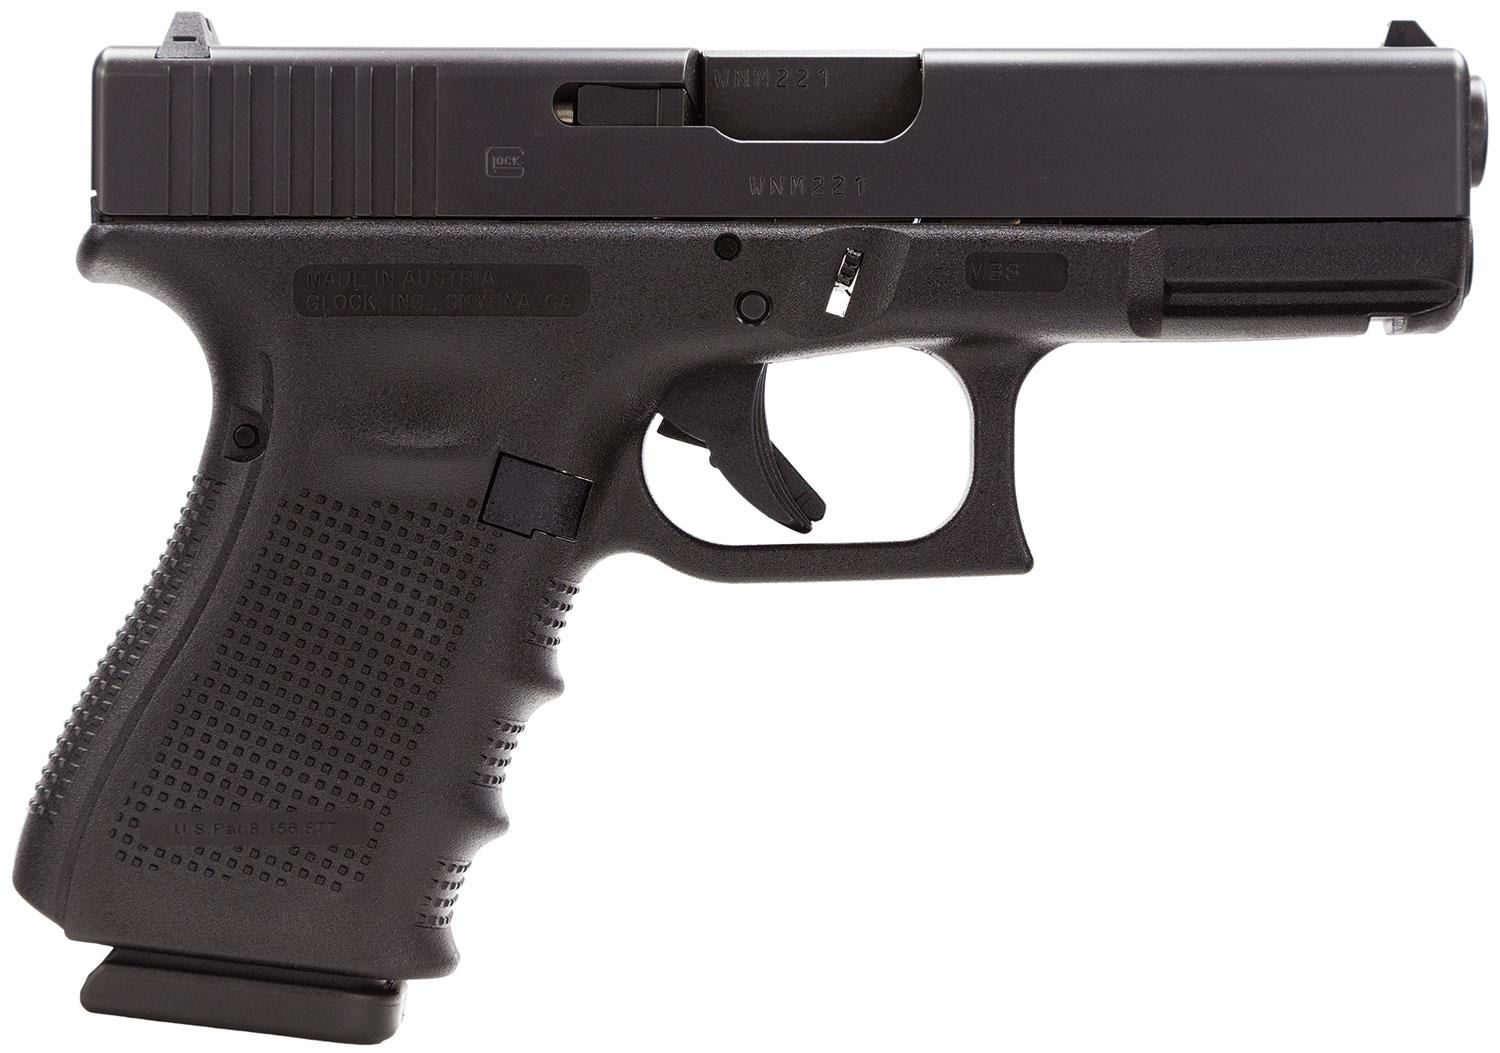 Glock G19 Compact Pistol UI1959203, 9mm, 4.01", Black Interchangeable Backstrap Grips, Black Finish, 15 Rds